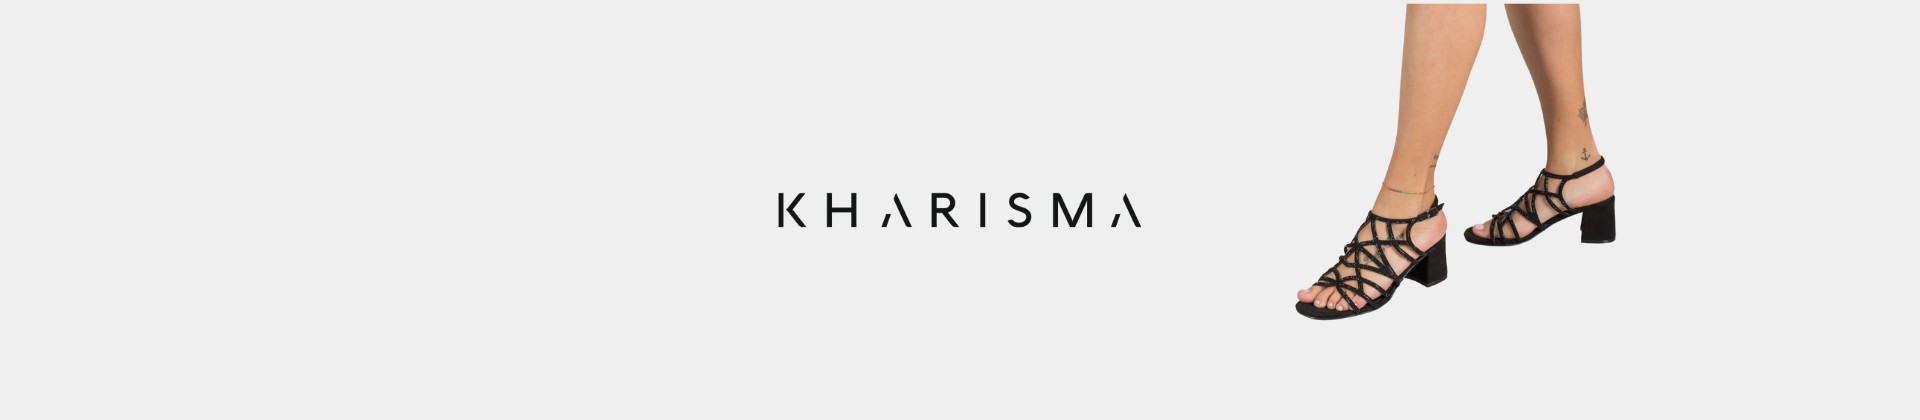 Kharisma shoesfor sale on line